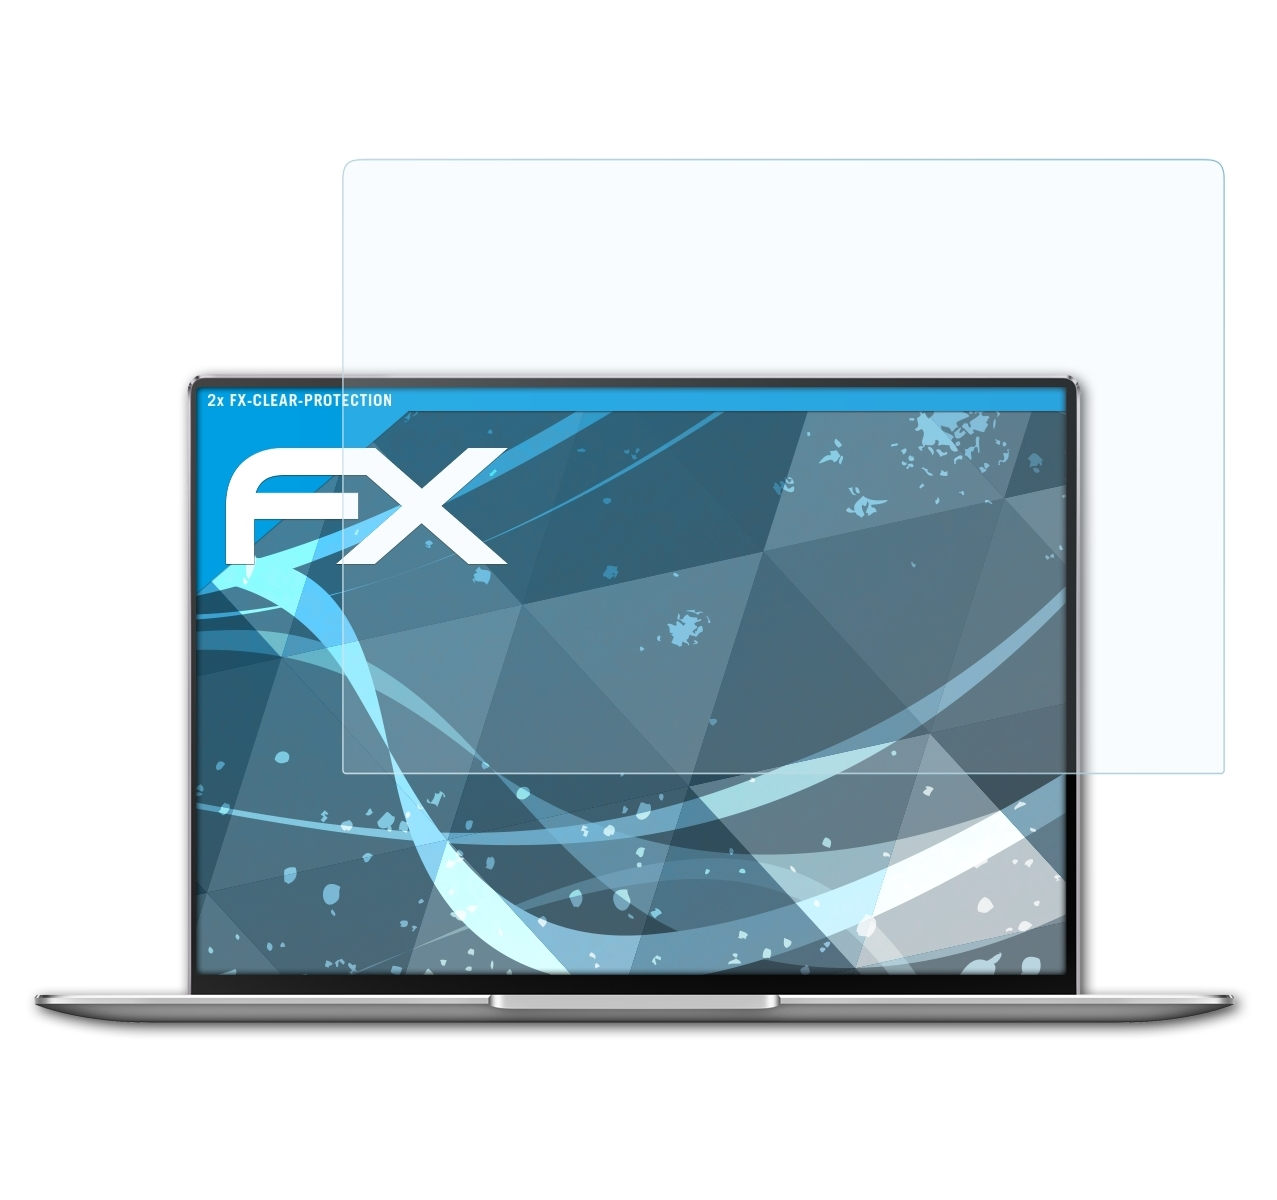 FX-Clear Huawei (2020)) 2x ATFOLIX X Pro MateBook Displayschutz(für